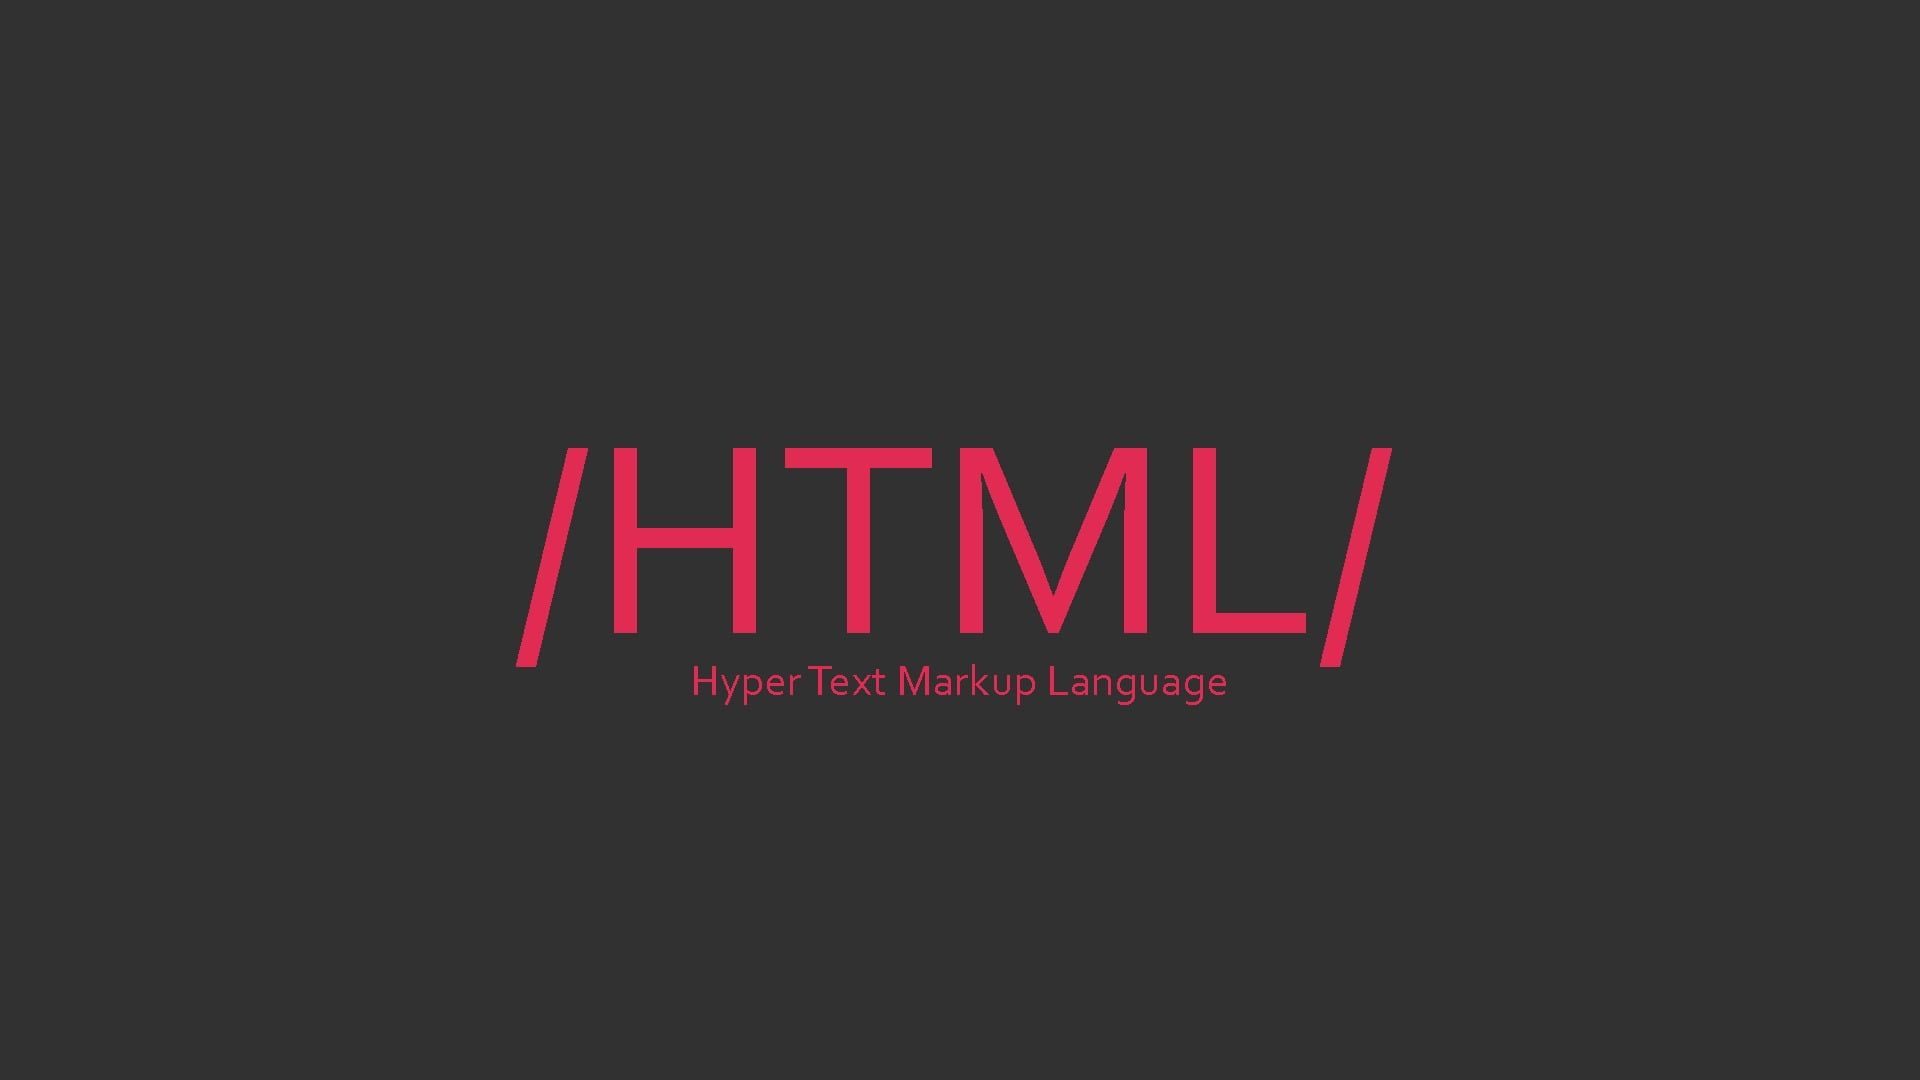 HTML logo #code web development #development #HTML P #wallpaper #hdwallpaper #desktop. Web development, Web development tutorial, Coding